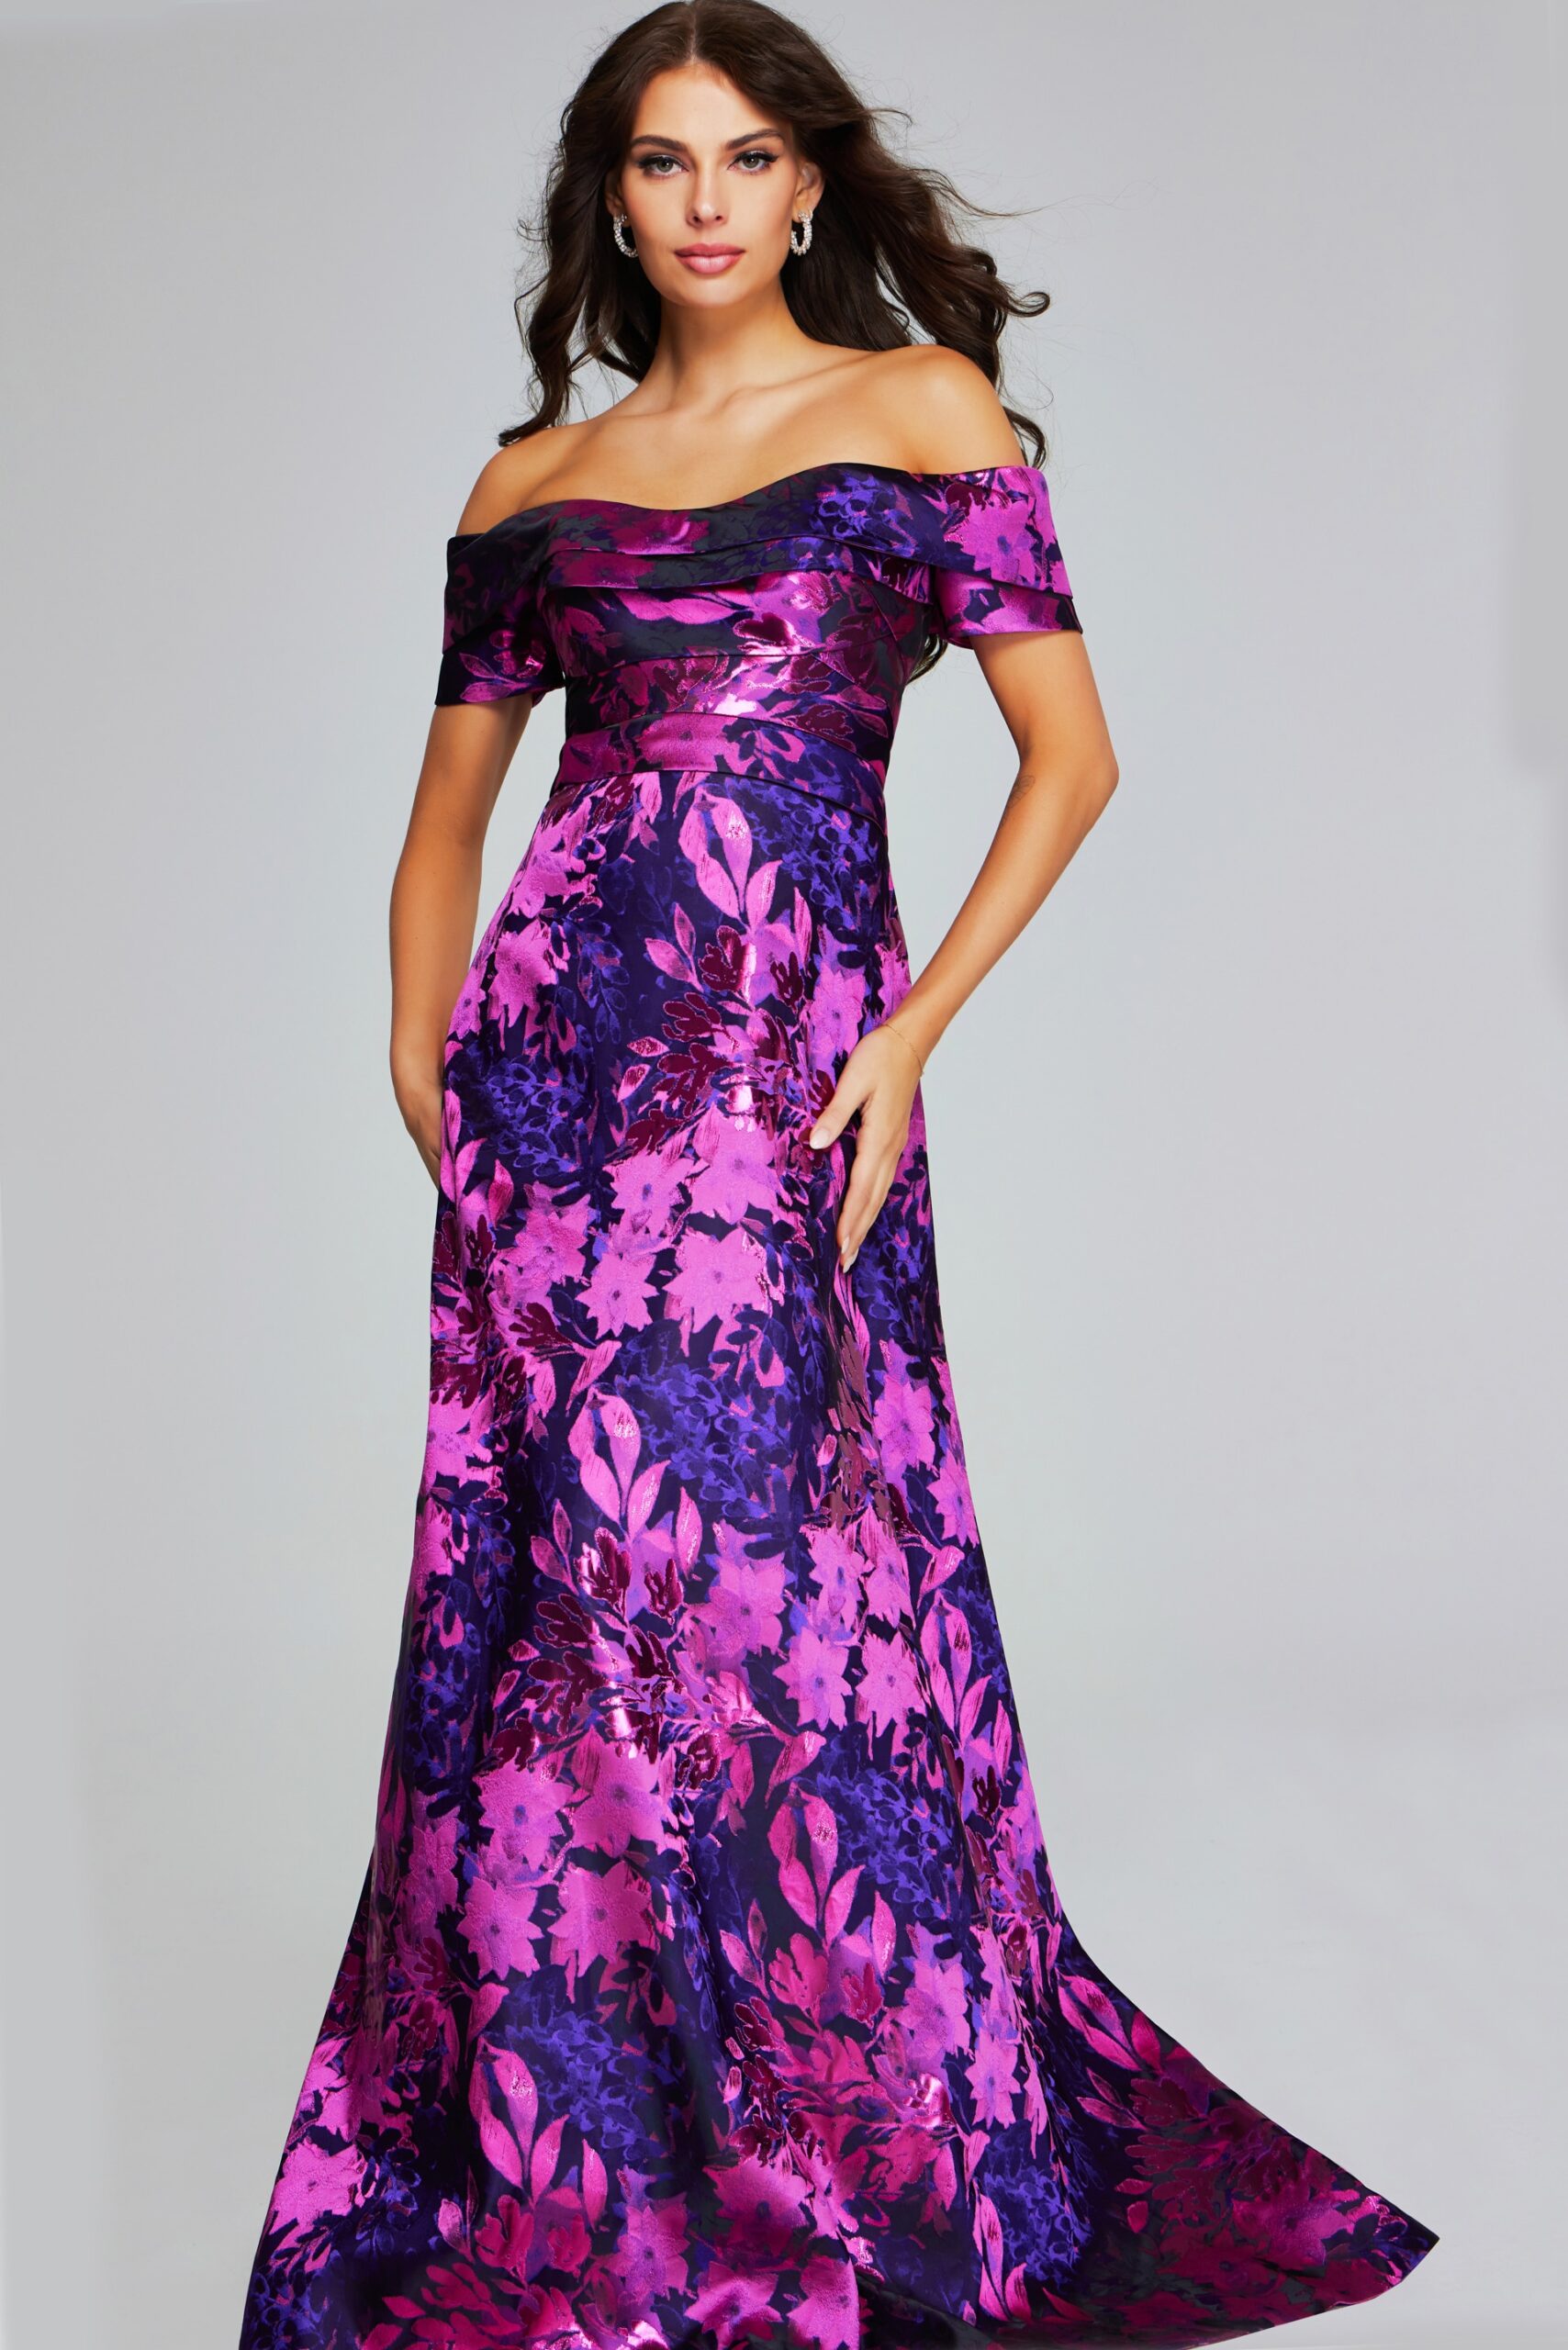 Model wearing Vibrant Fuchsia Purple Off-Shoulder Gown 42506